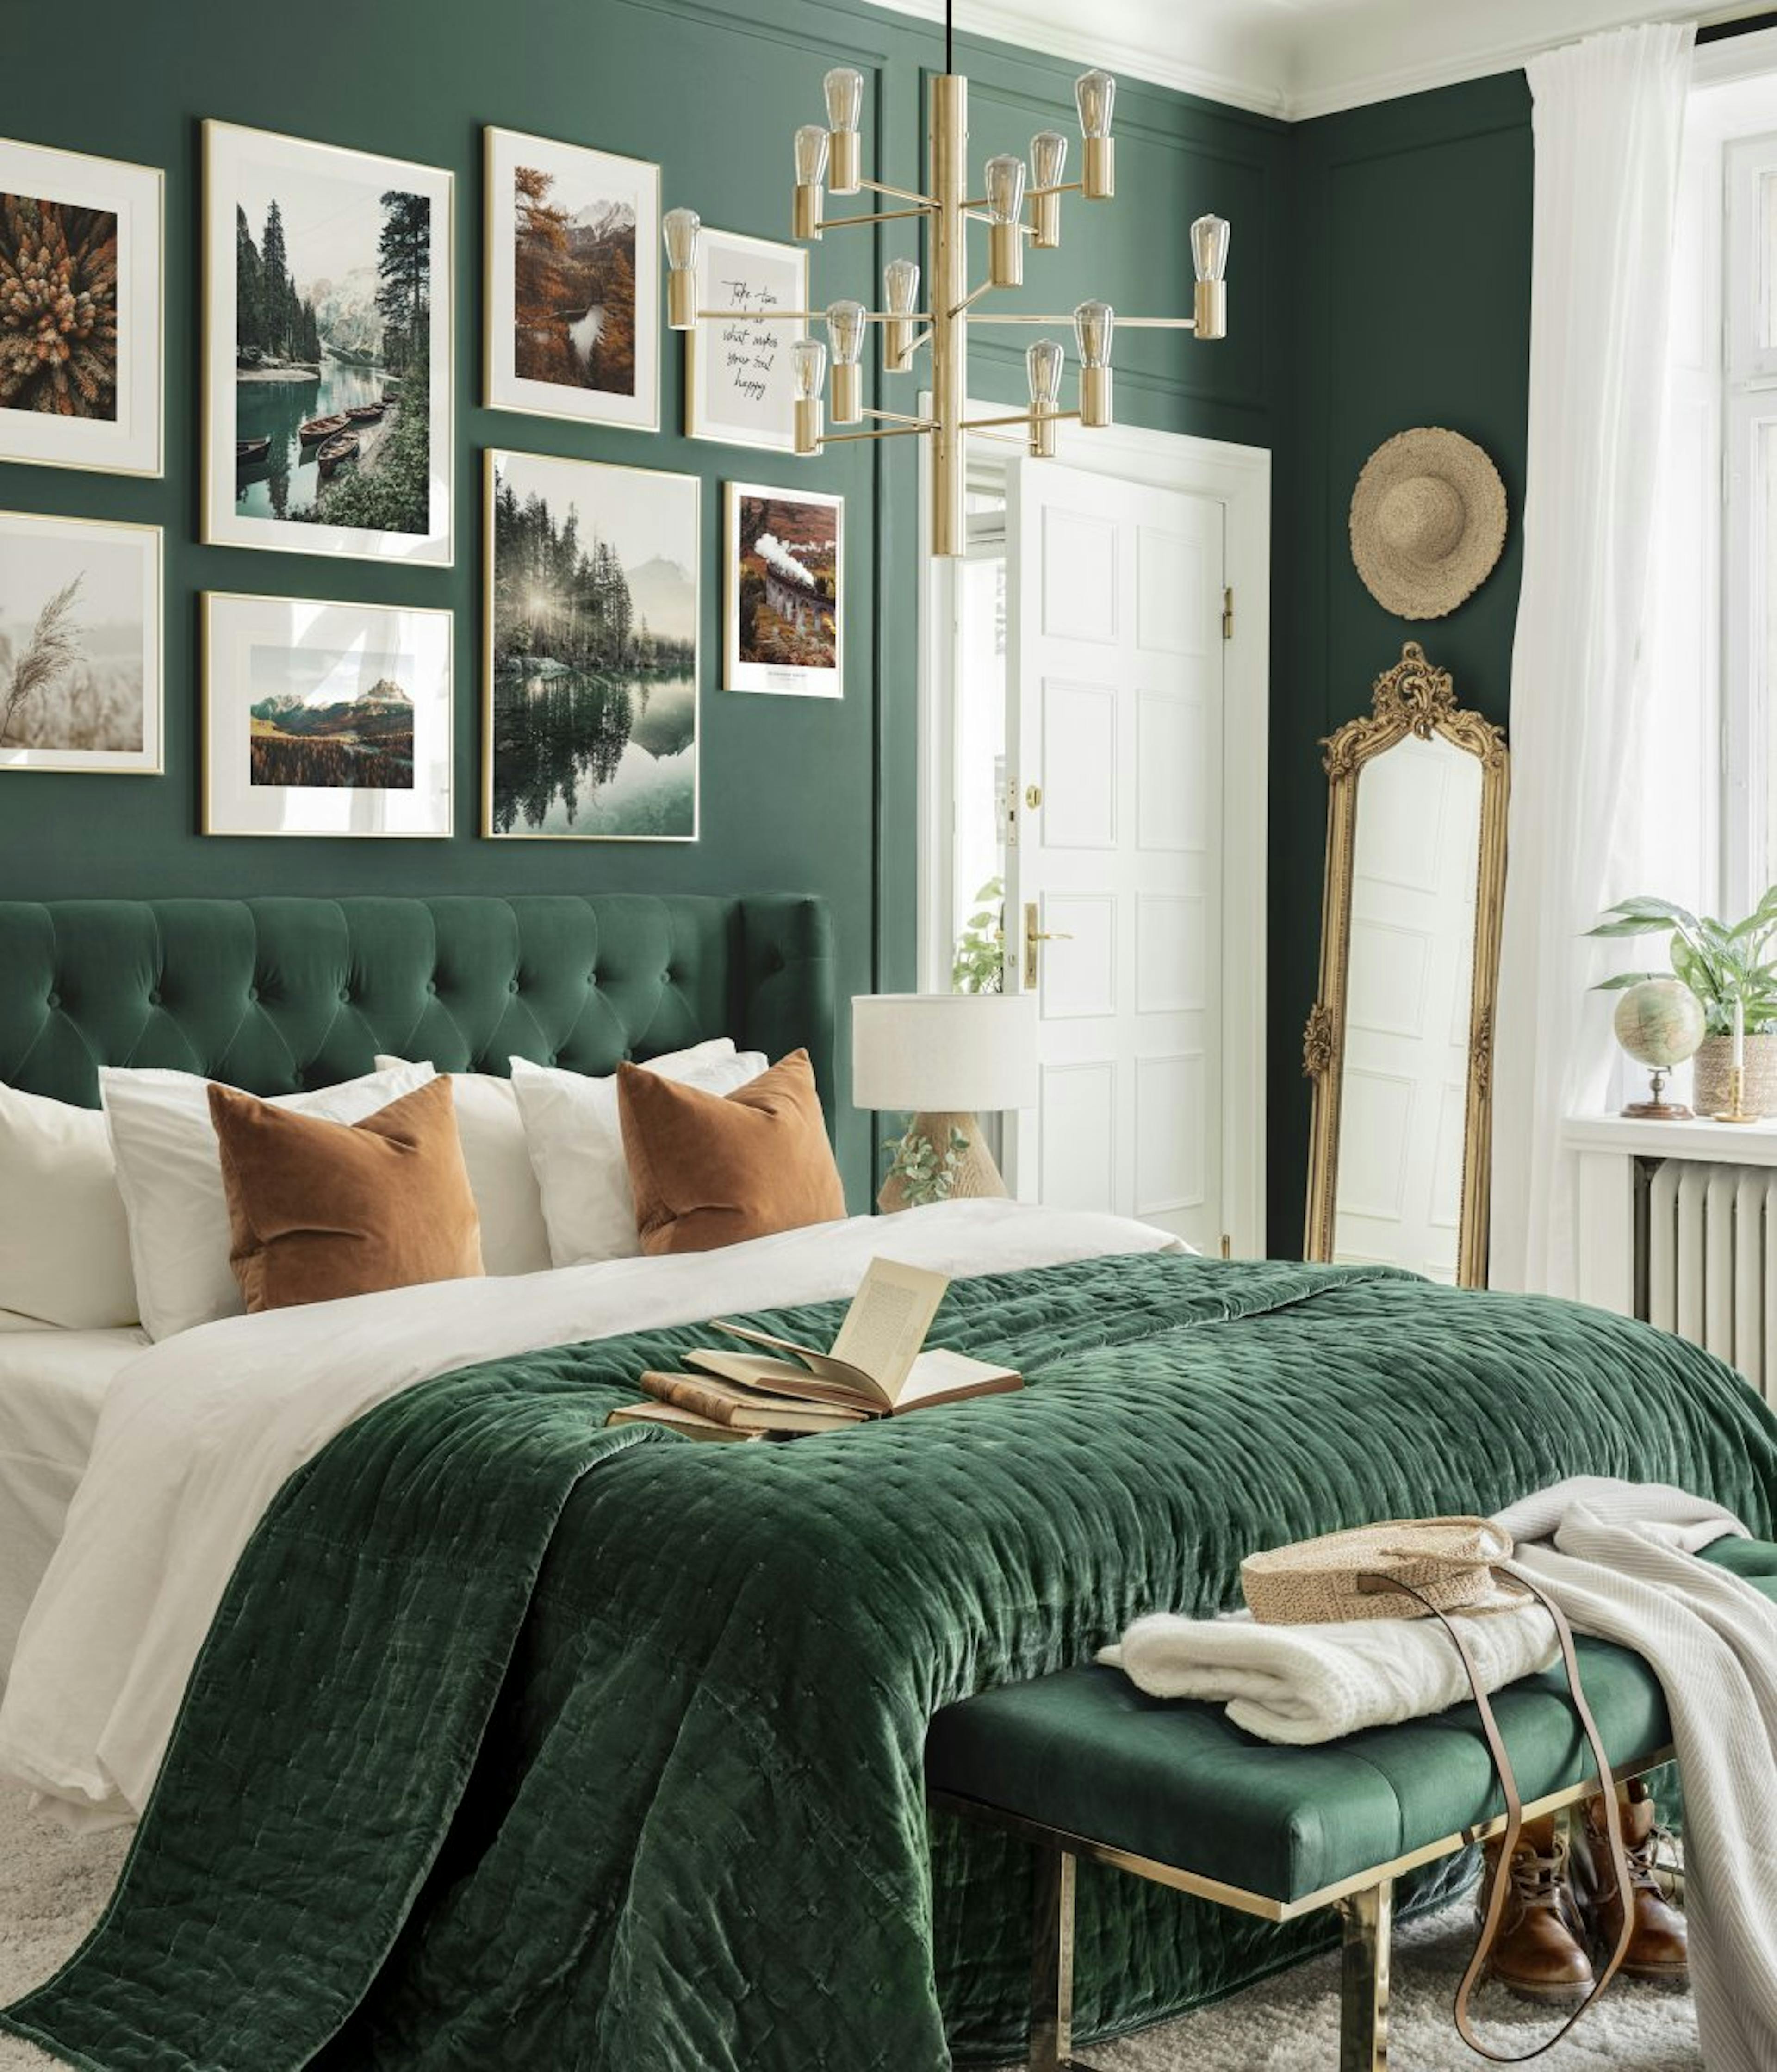 Naturalna galeria obrazow zielona sypialnia plakaty krajobrazy zlote ramki